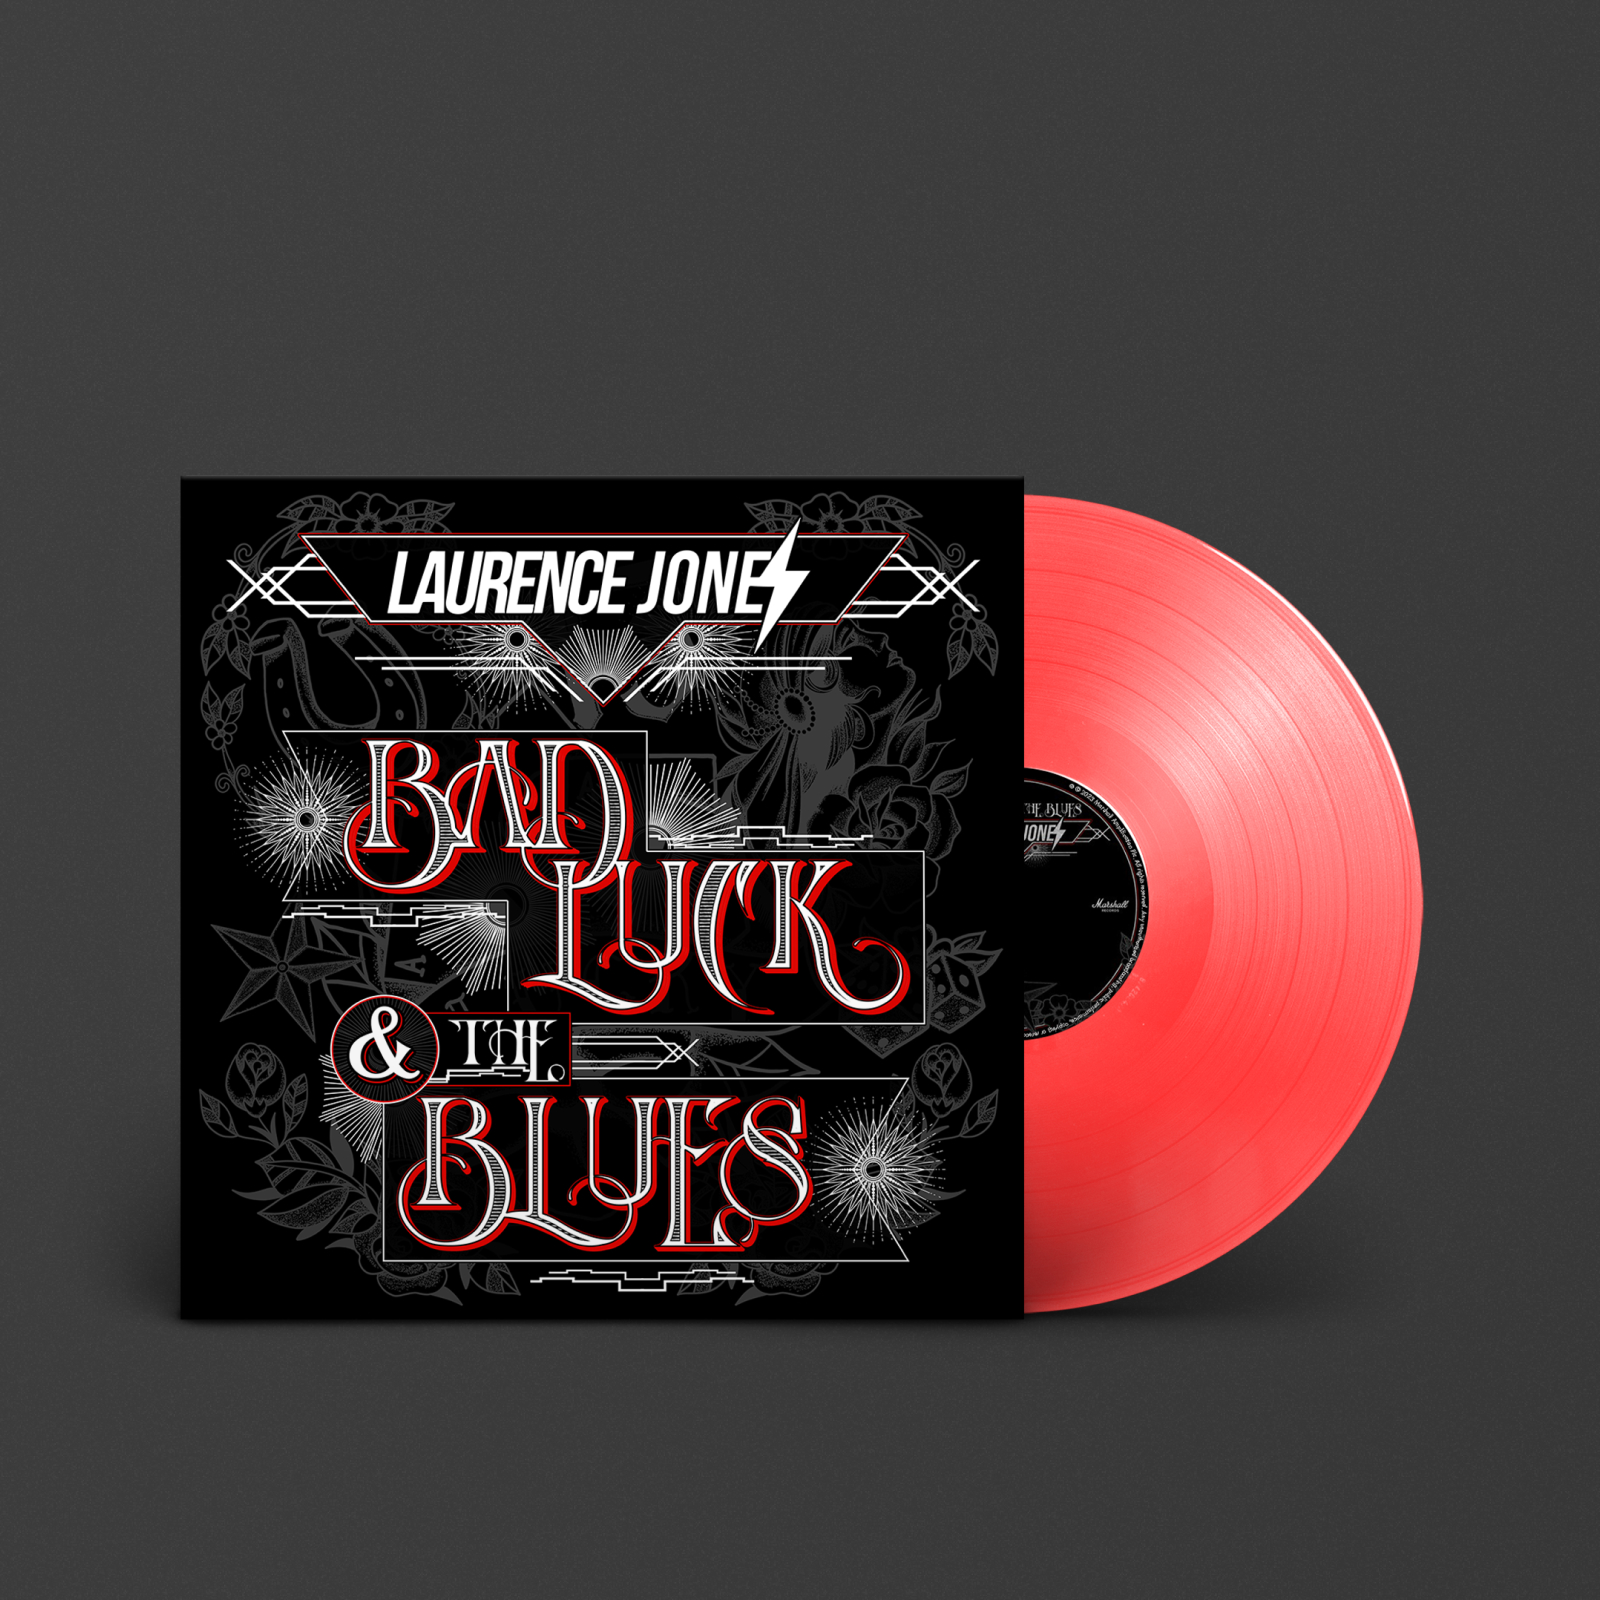 Disco de vinilo rojo 'Bad luck & the Blues' de 'Laurence Jones'.